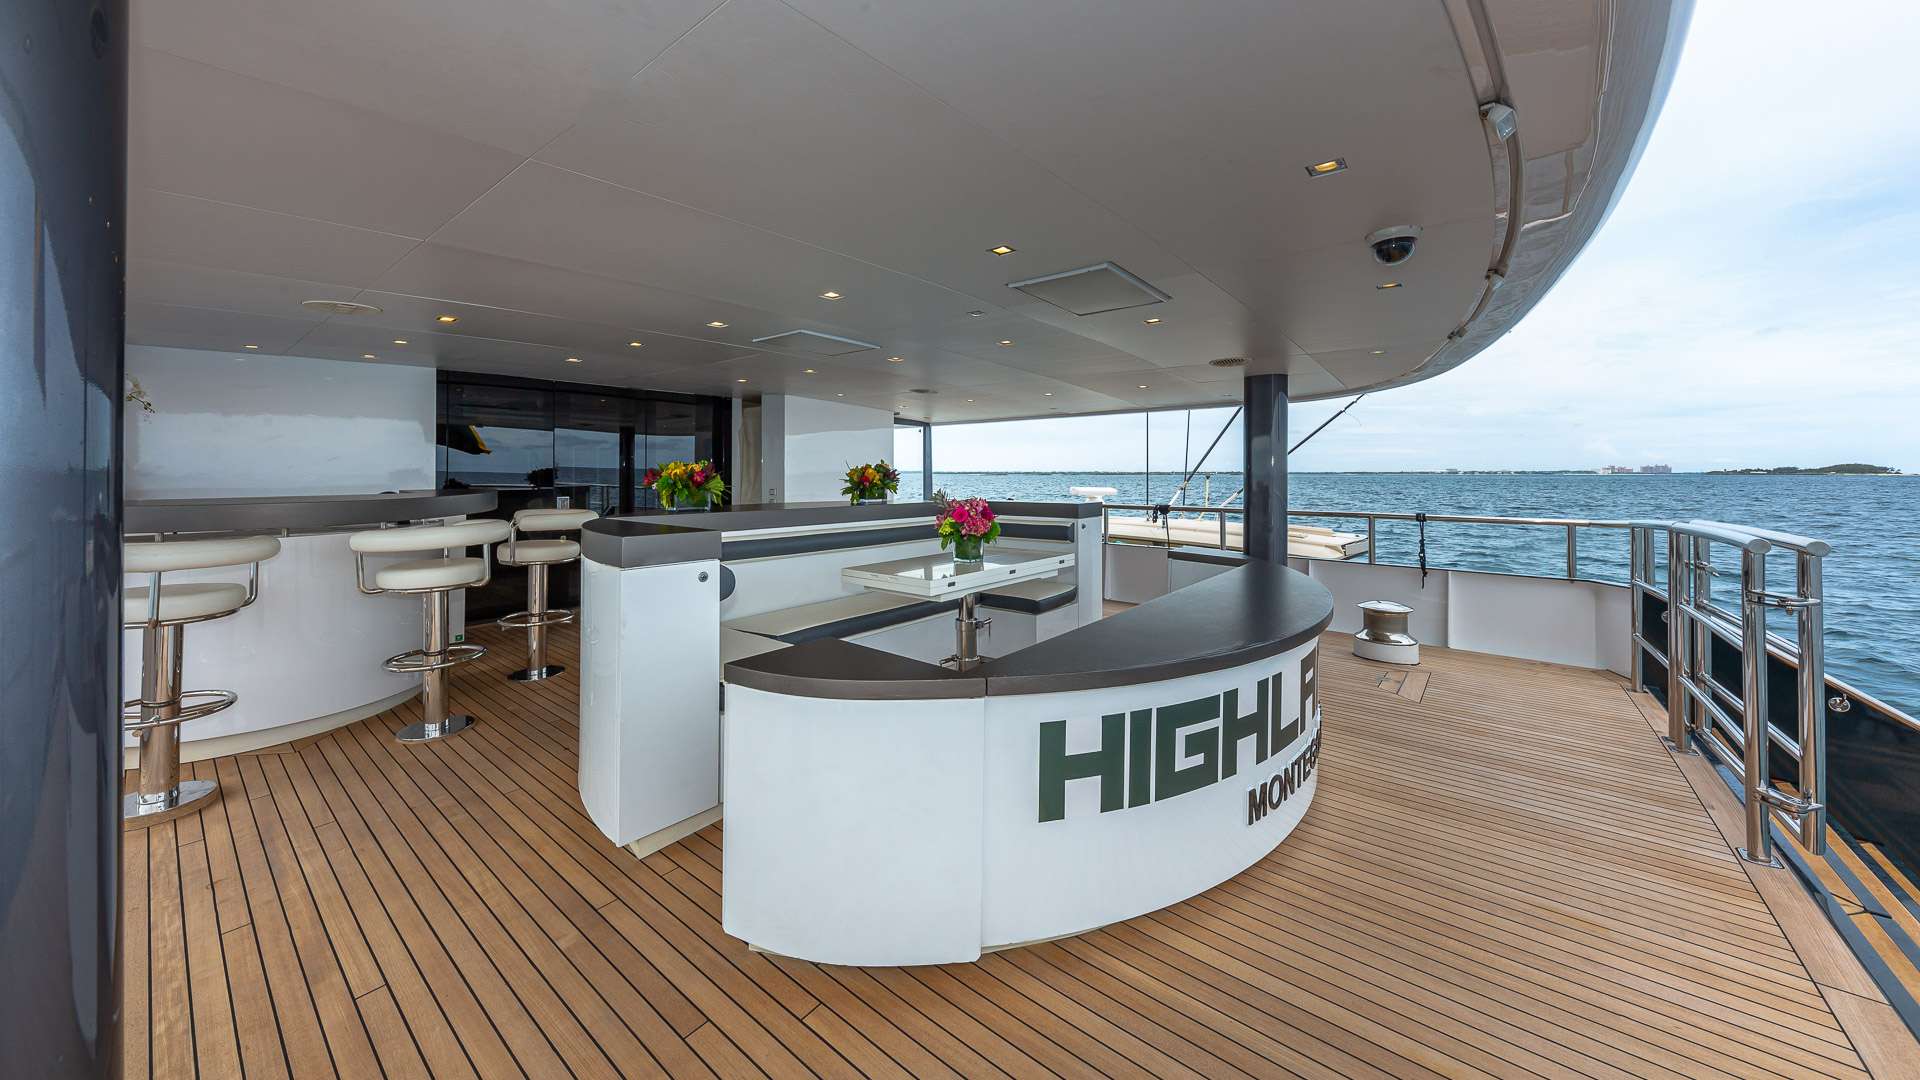 HIGHLANDER - Superyacht charter St Martin & Boat hire in Caribbean, Bahamas, Florida East Coast, Cuba, Dominican Republic, Turks and Caicos, USA South East 5